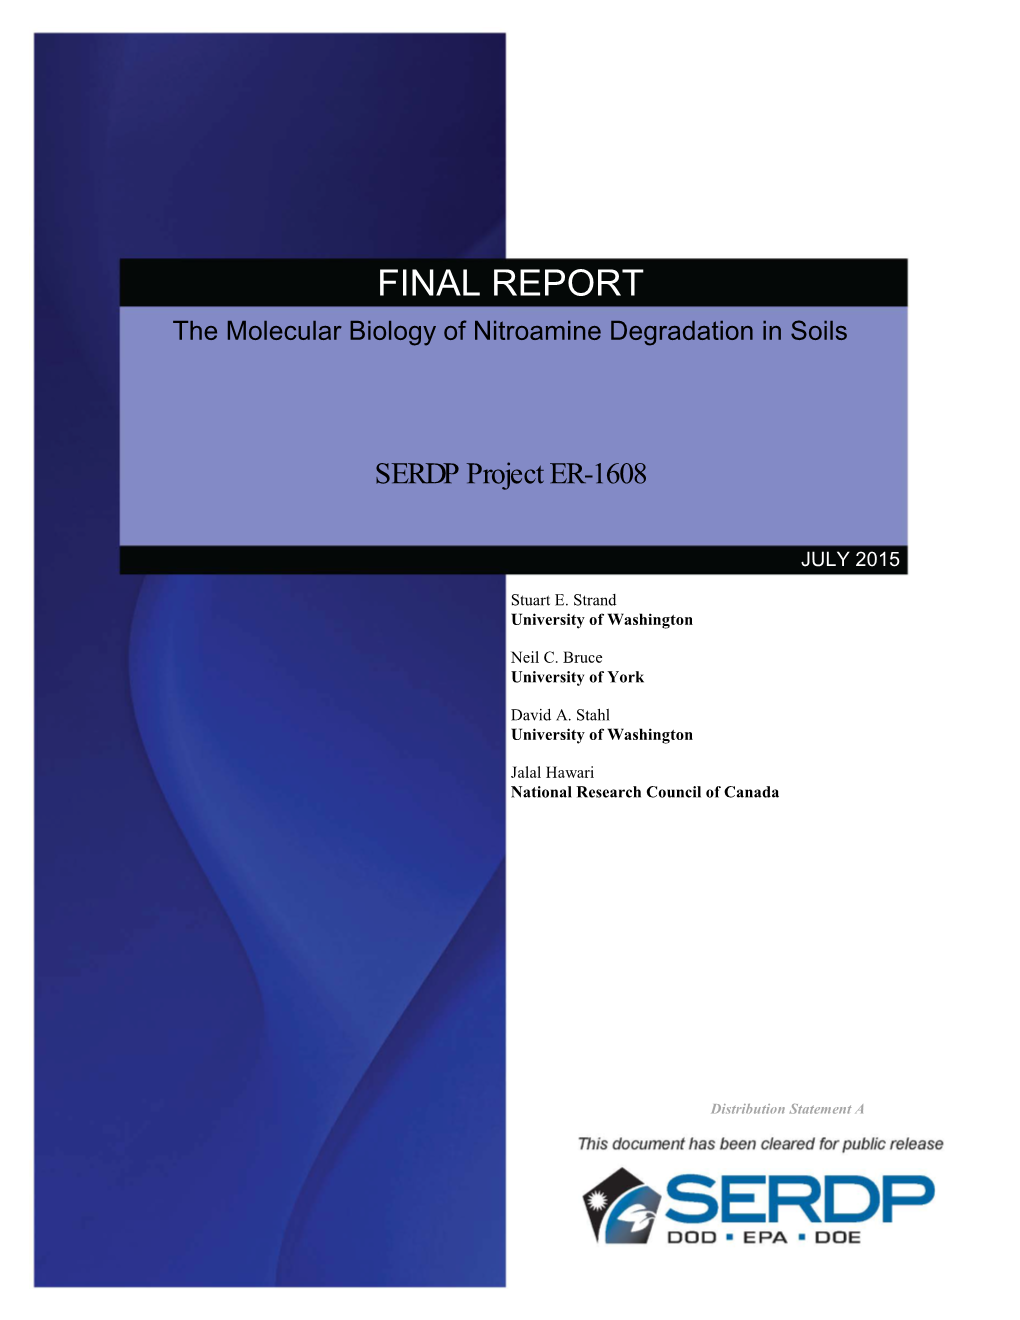 FINAL REPORT the Molecular Biology of Nitroamine Degradation in Soils